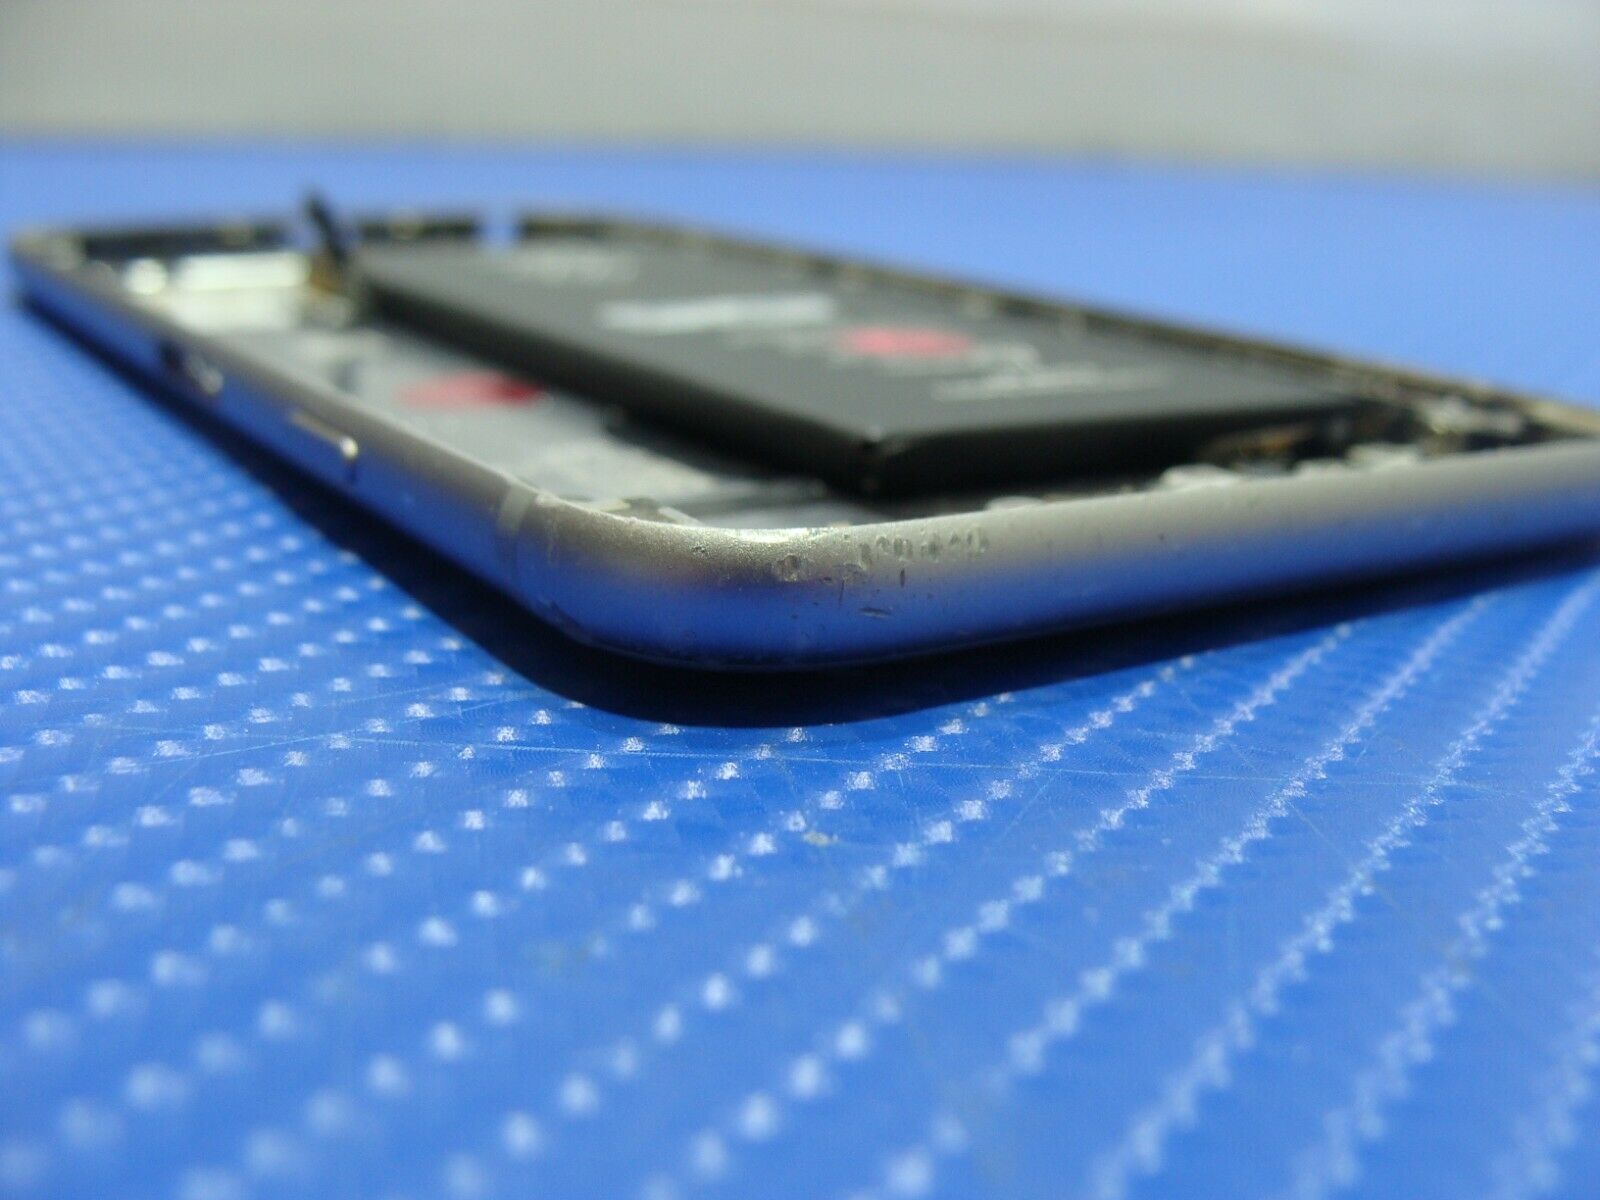 iPhone 6 A1549 MG4W2LL/A Late 2014 4.7